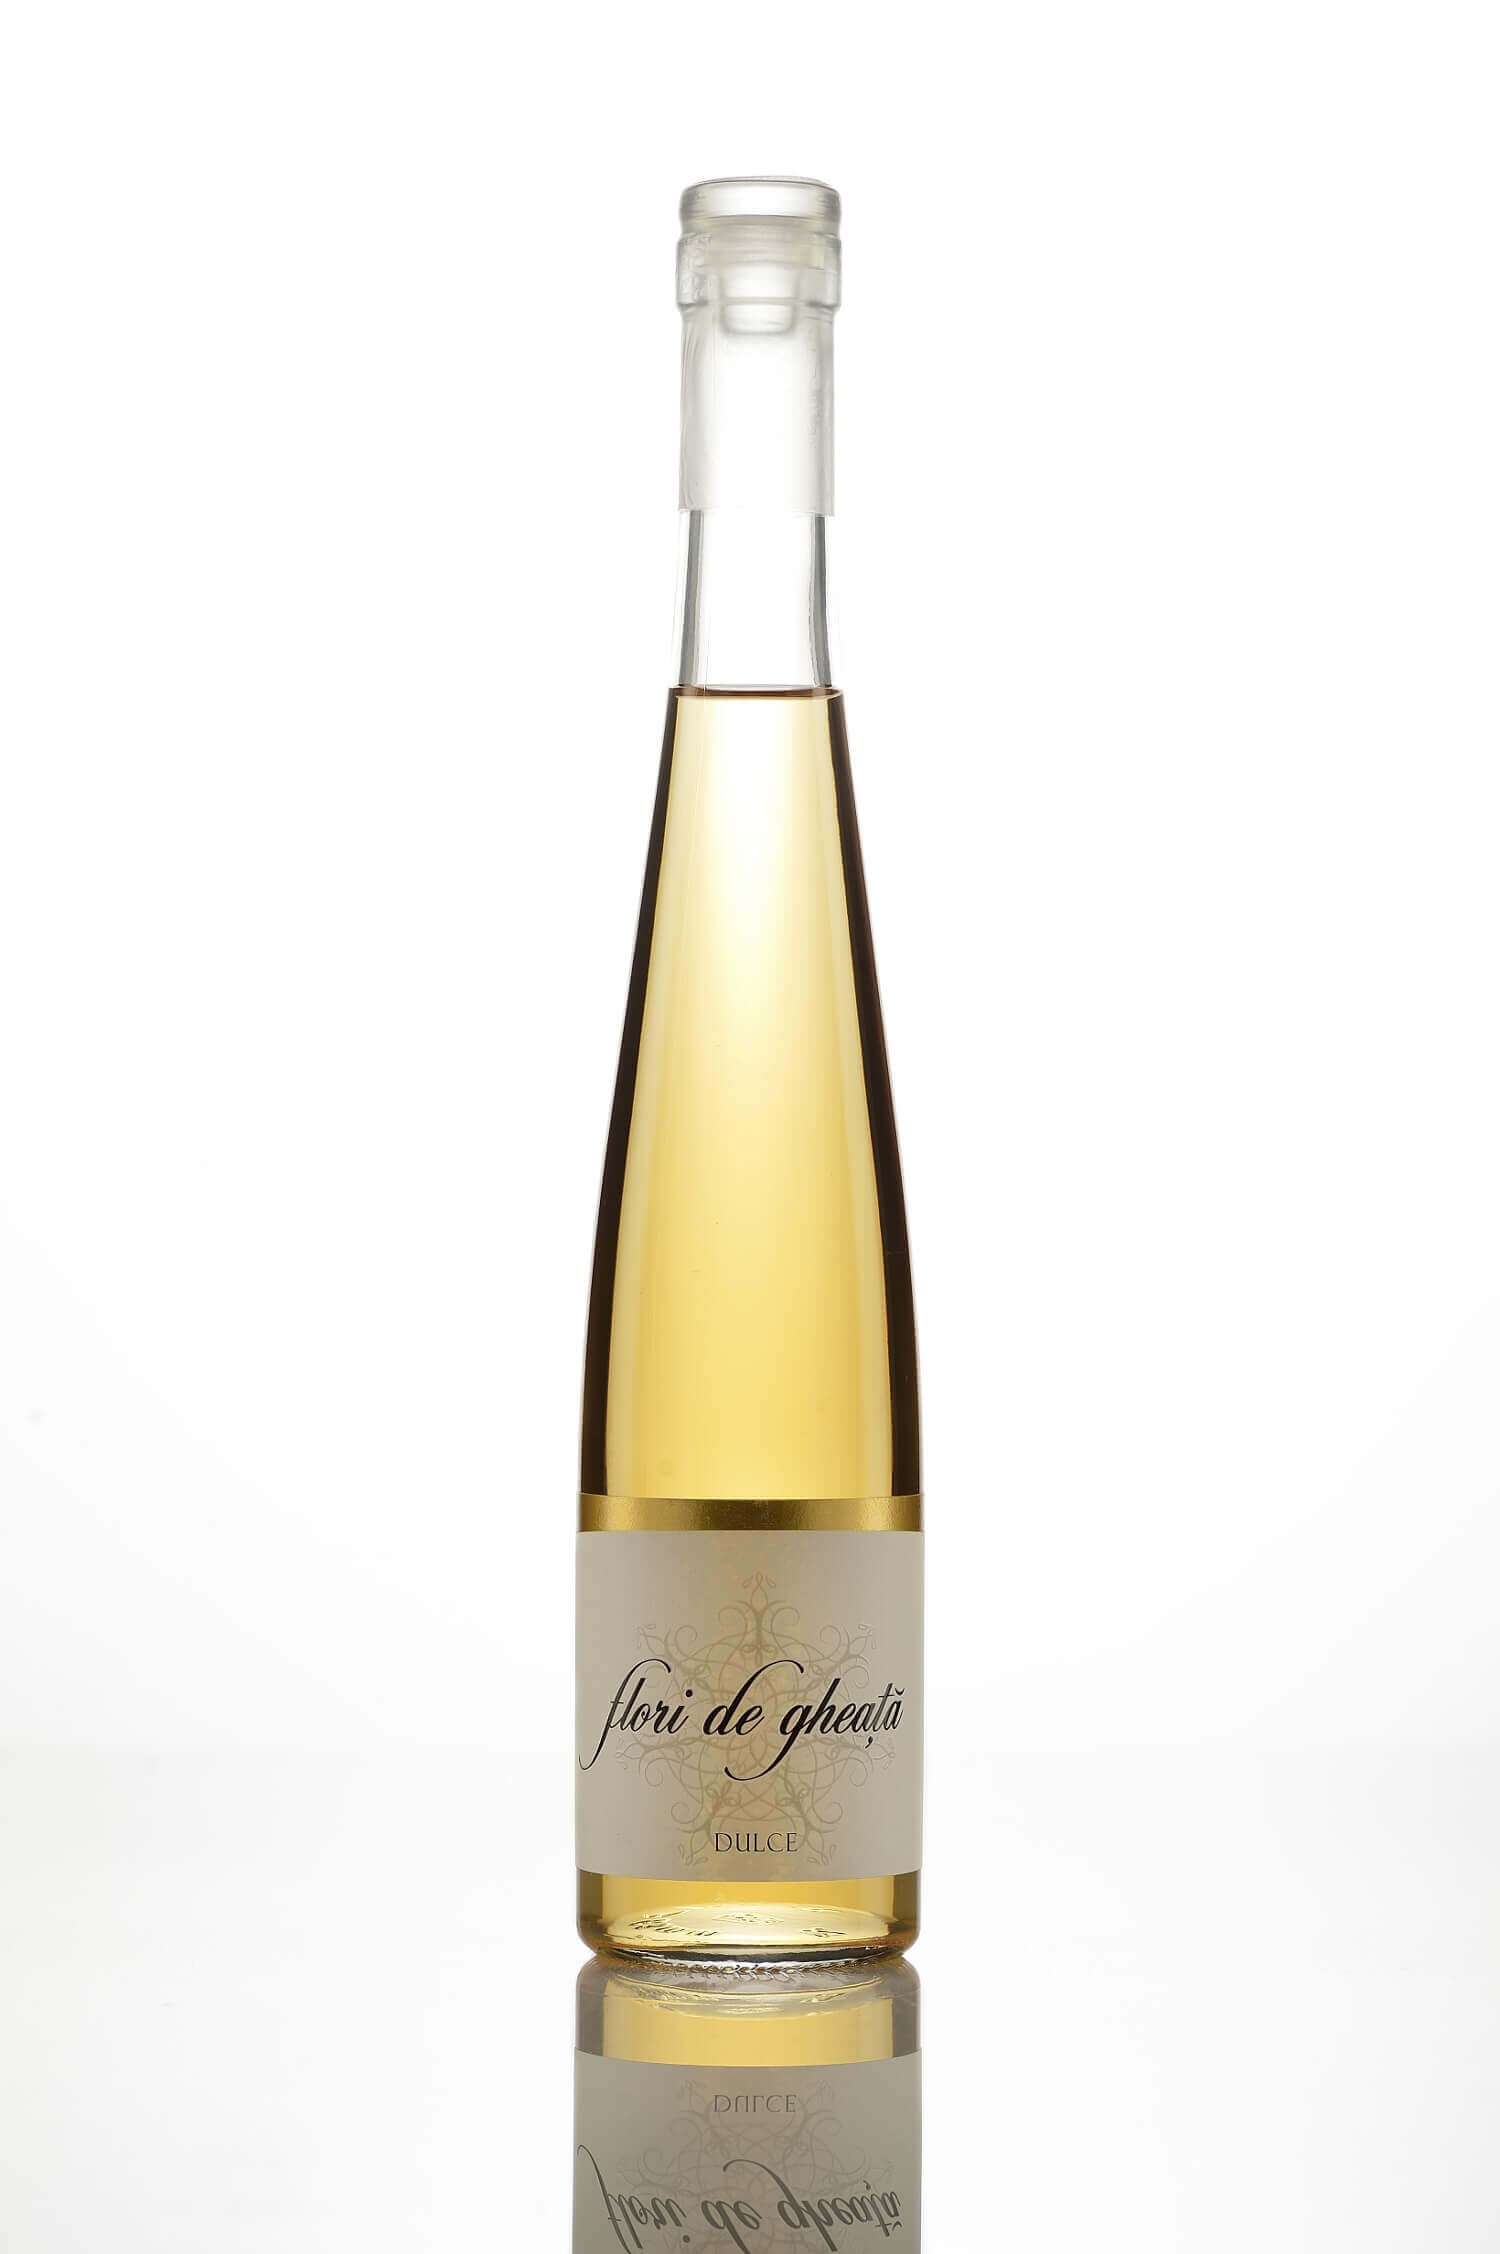 Vin alb - Flori de gheata, dulce, 2015 | Domeniile Tohani